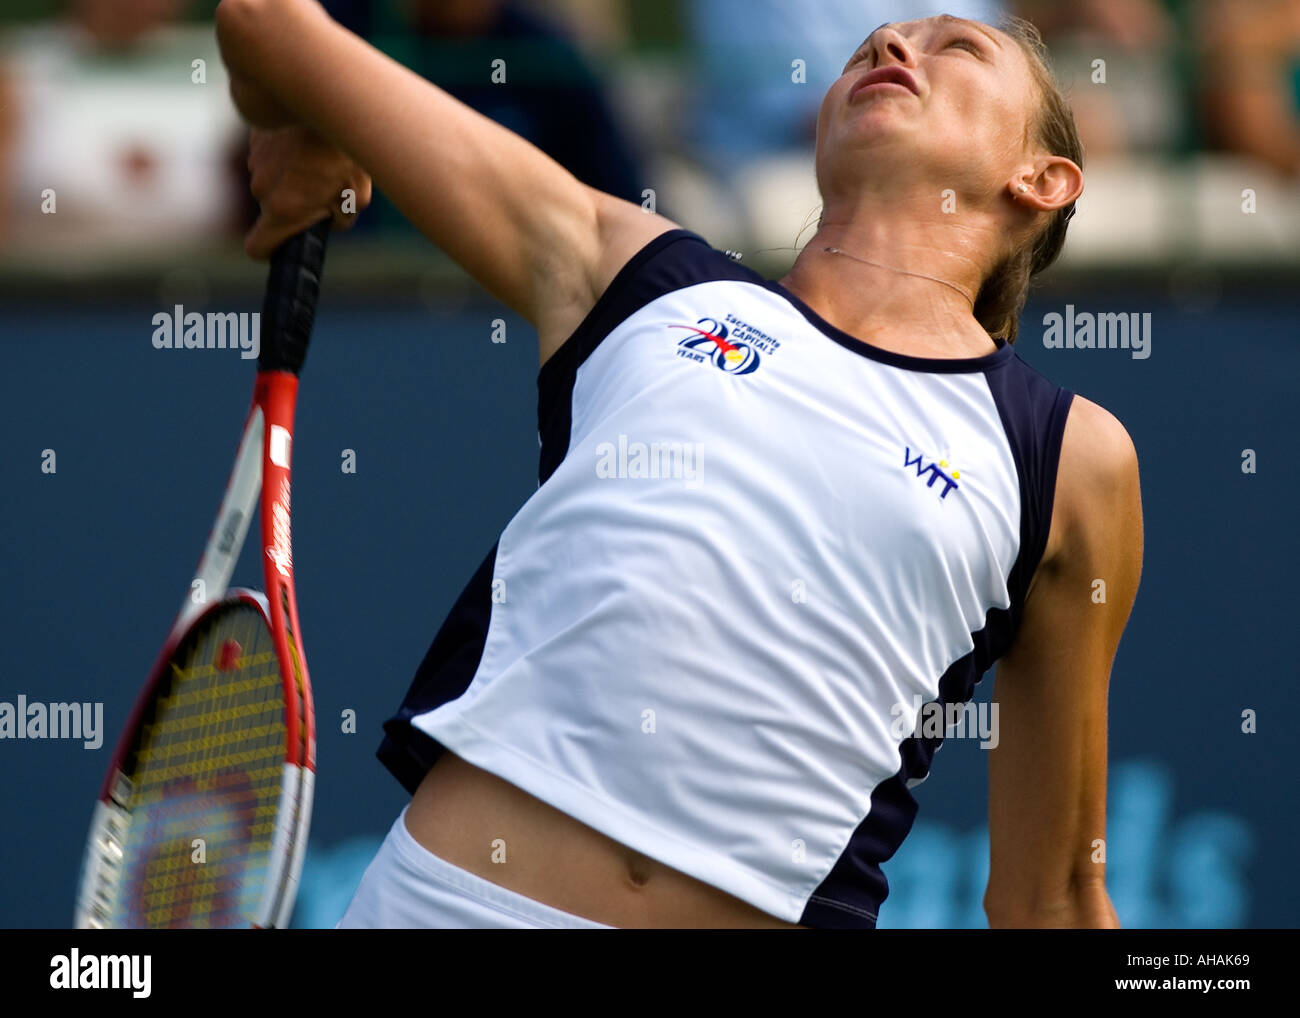 Elena Likhovtseva, WTA professional tennis player serves during tournament play. Stock Photo